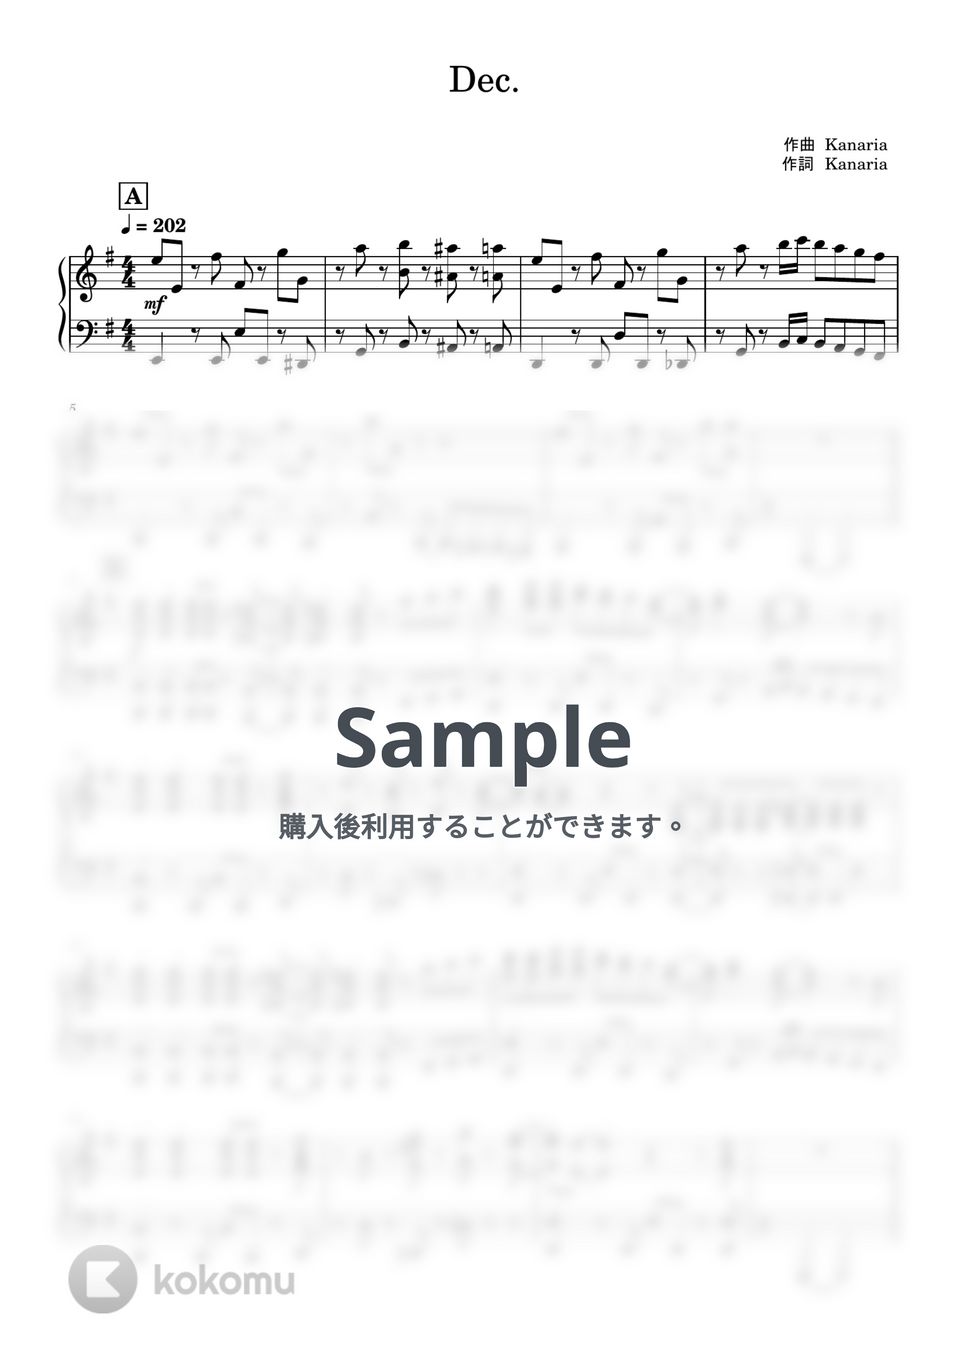 Kanaria - Dec. (ピアノソロ / 上級) by xxTazxx